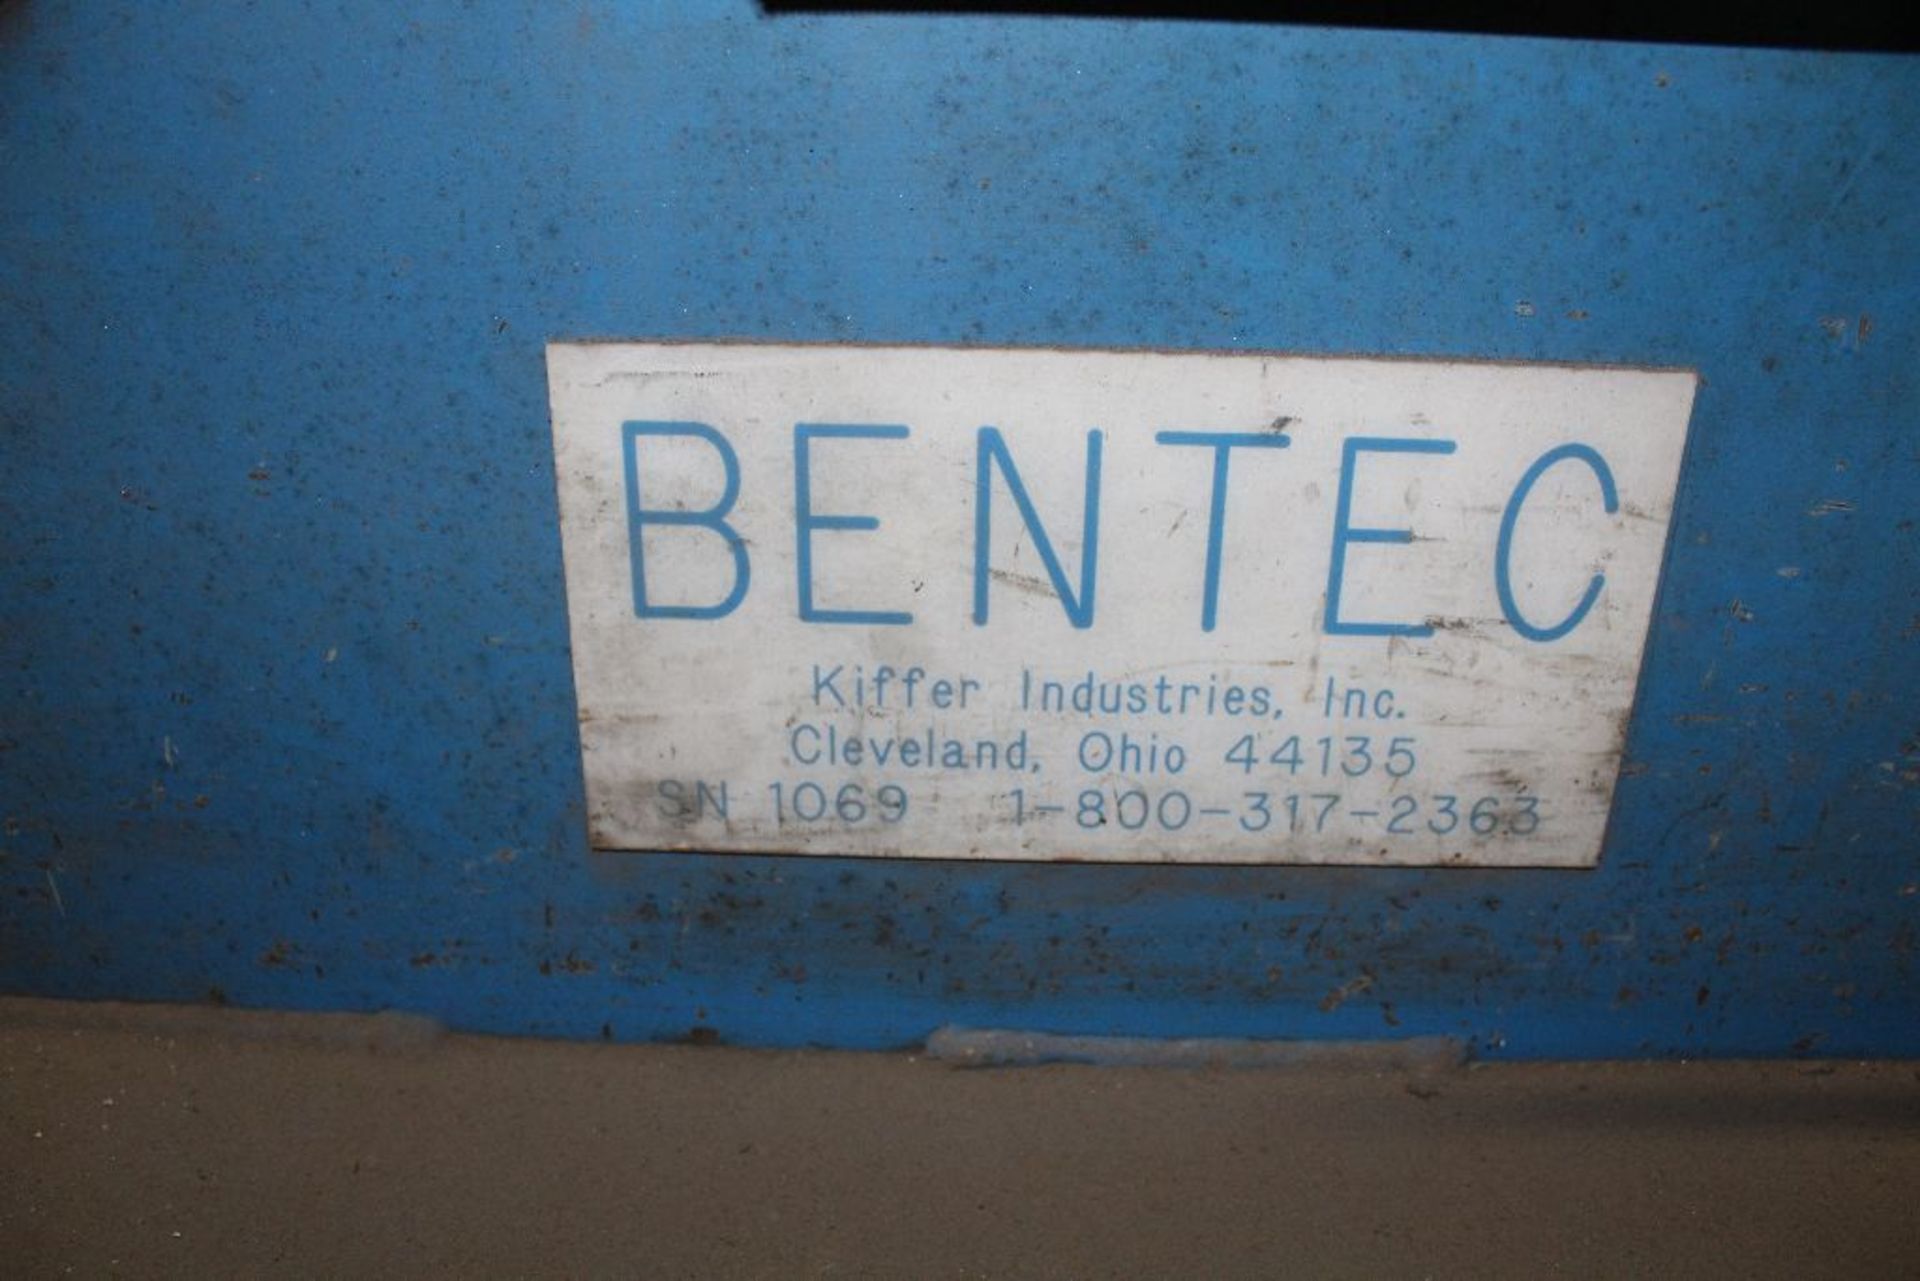 Bentec hydraulic bender, model BT2000, sn 1069, 240 V, 3 phase. - Image 5 of 5